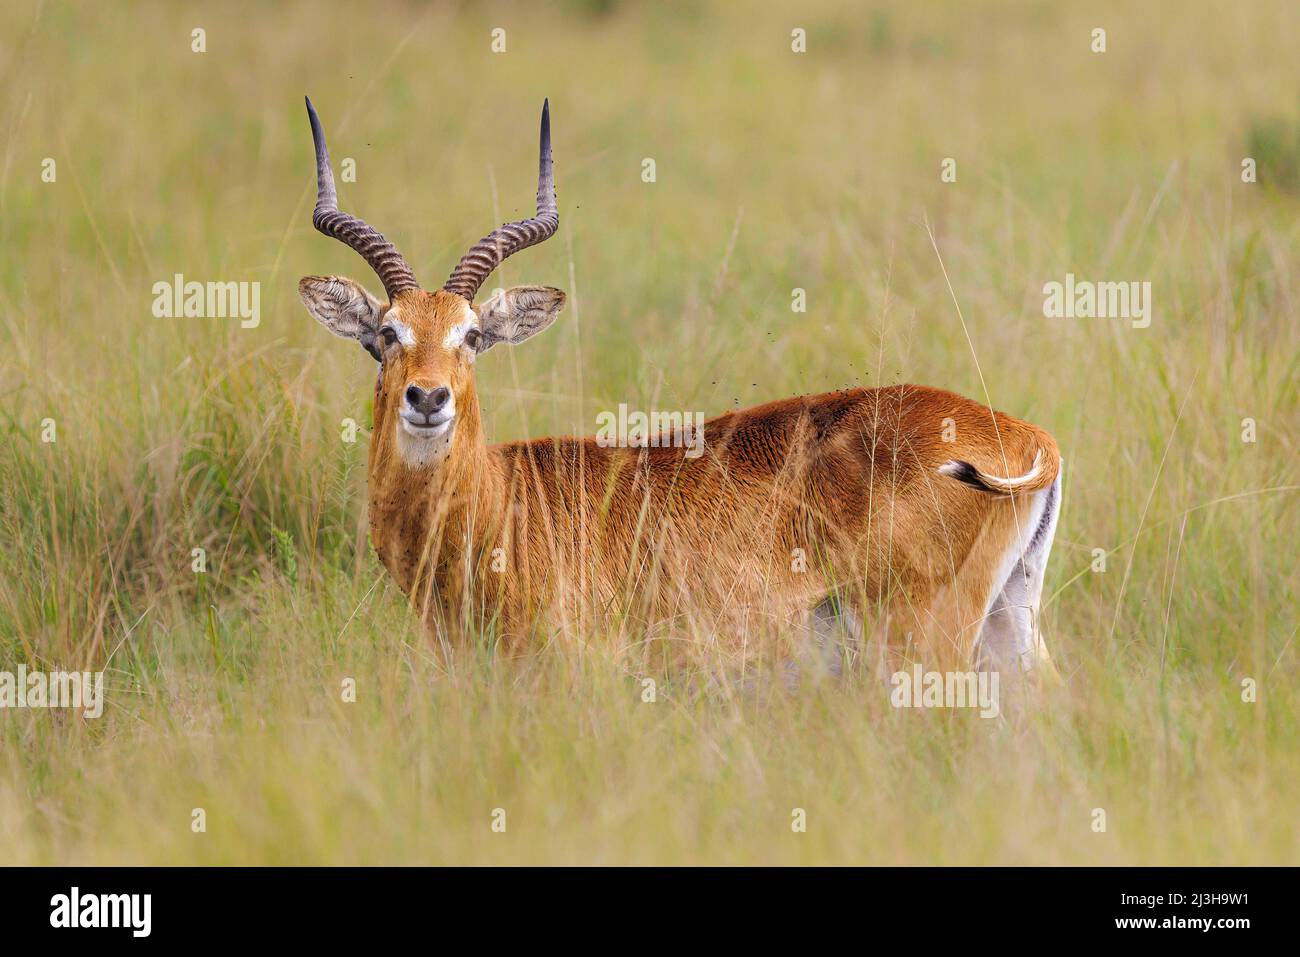 Uganda, Rubirizi district, Katunguru, Queen Elizabeth National Park, Ugandan kob Stock Photo